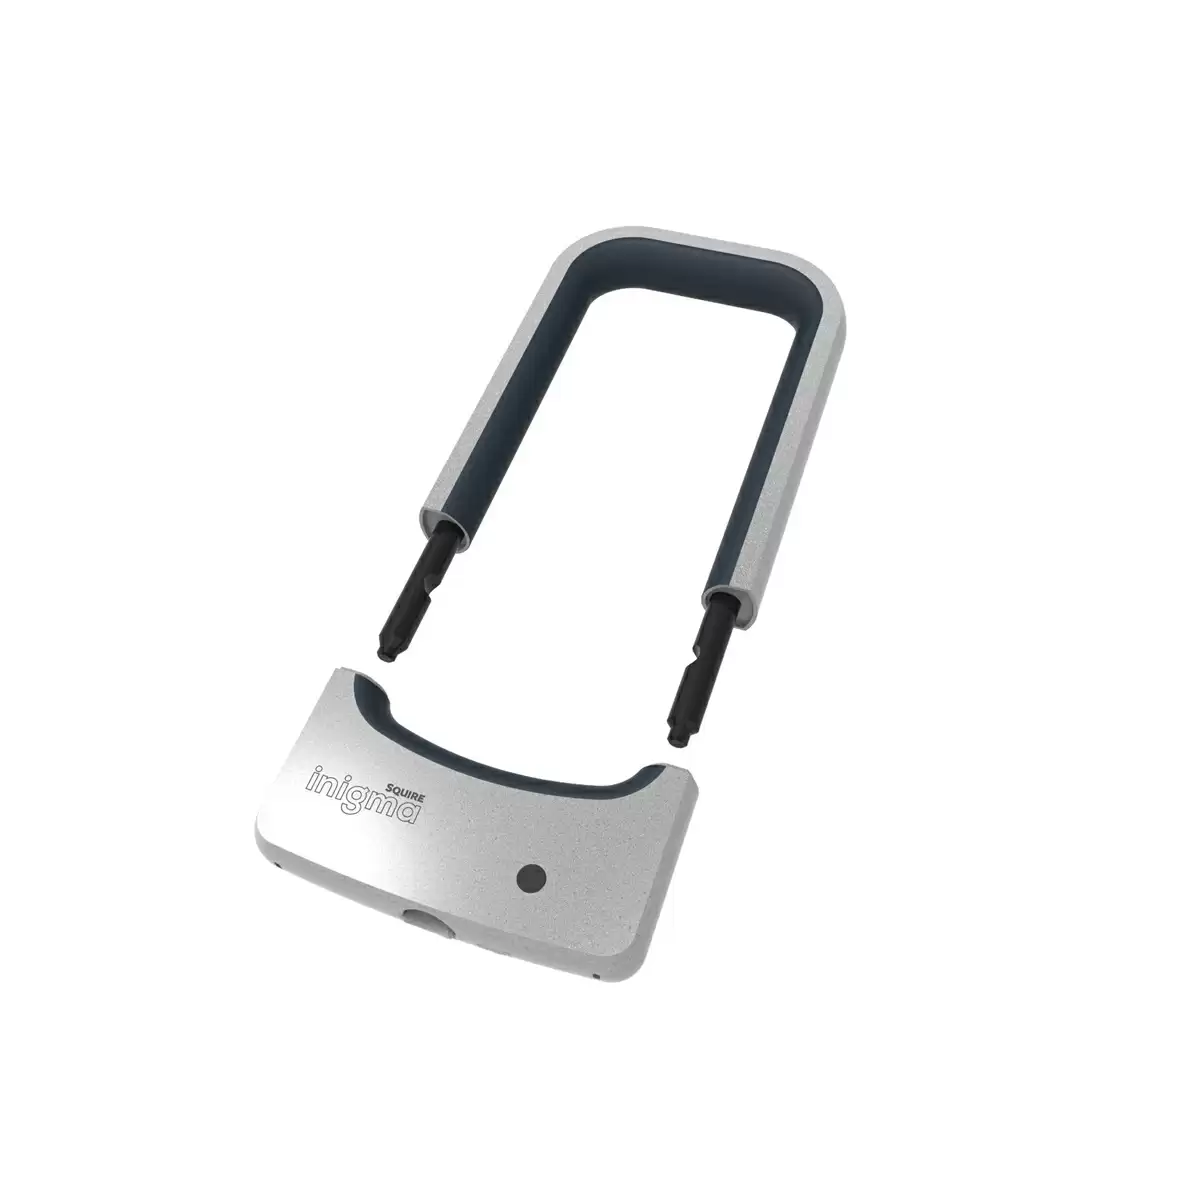 Bluetooth Bikelock Inigma BL1 190mm abierto/cierre con Smartphone - image